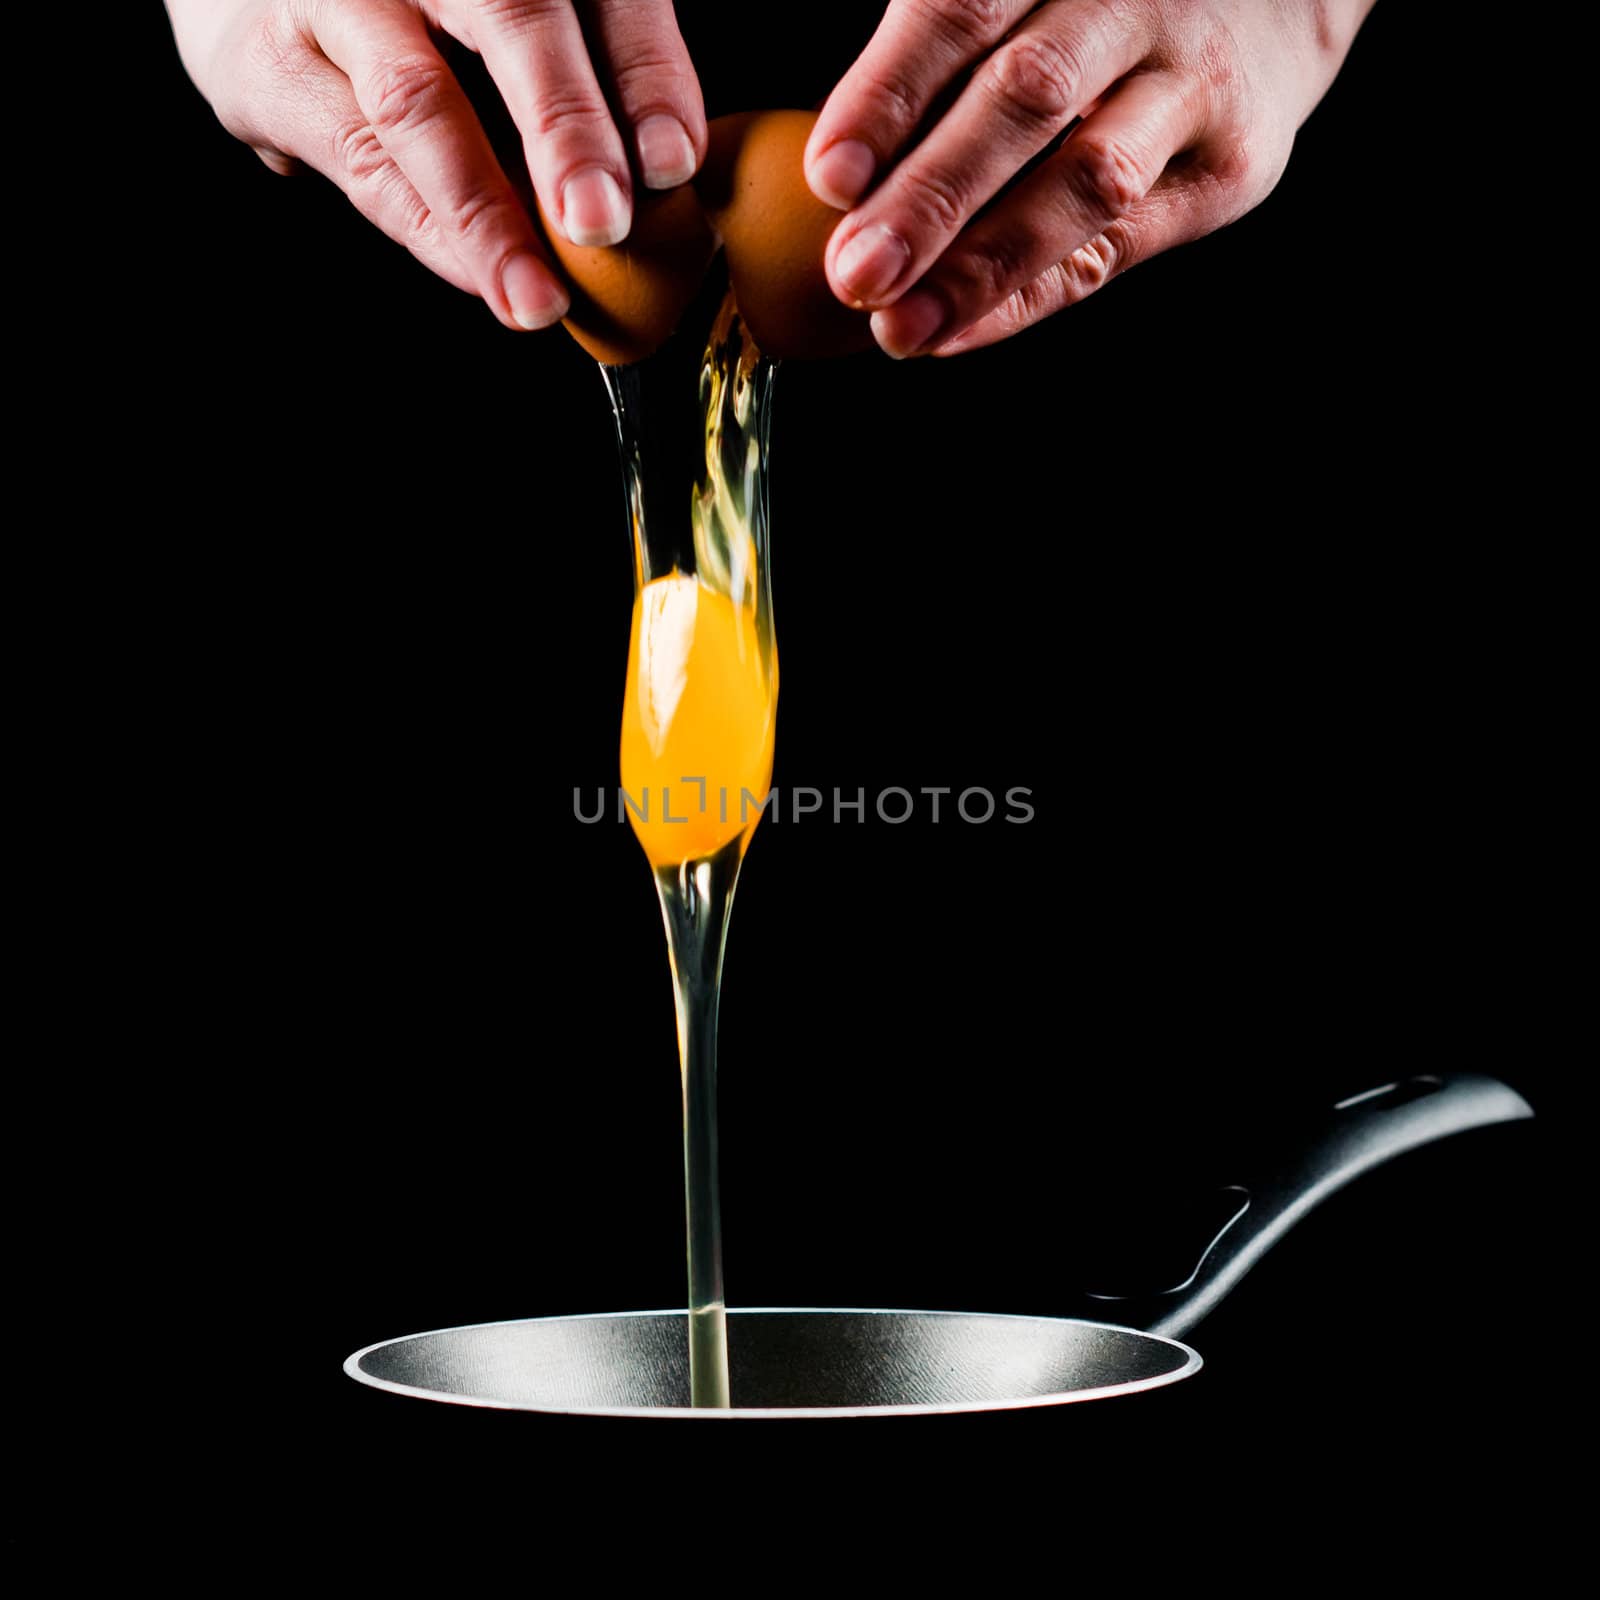 Yolk dropping in pan by dmitryelagin